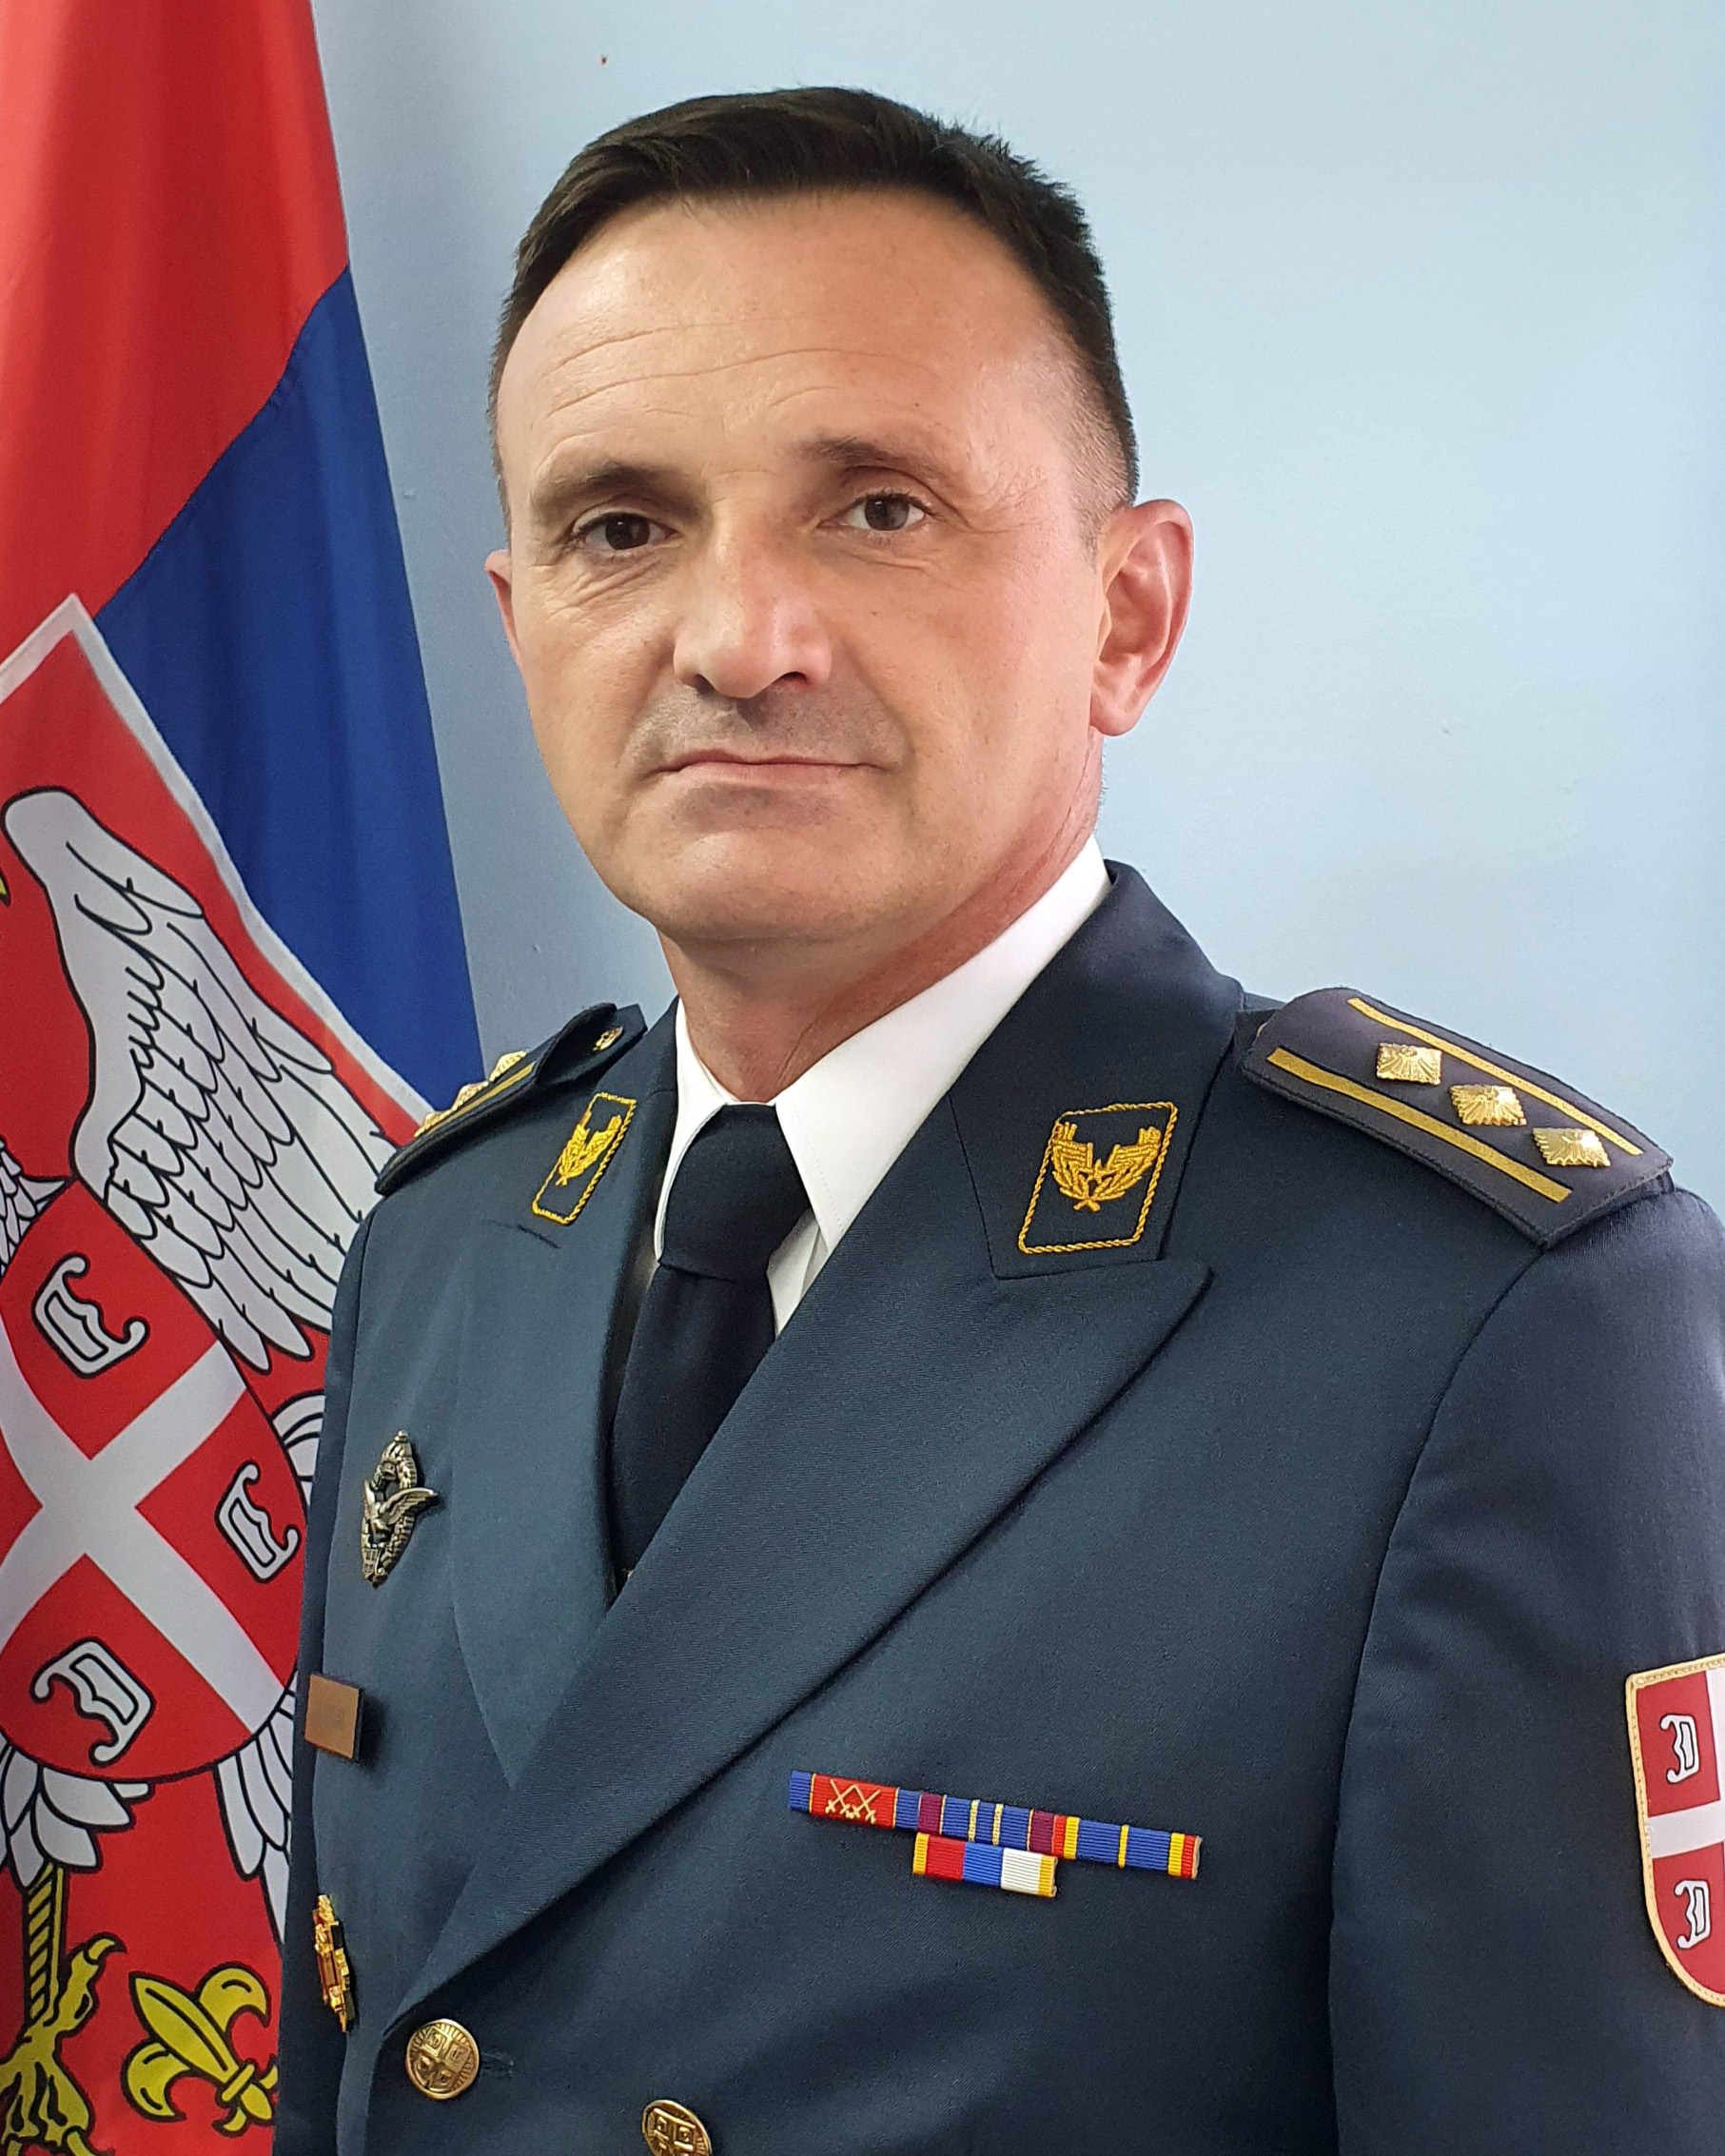 Colonel Dragan Mrdak